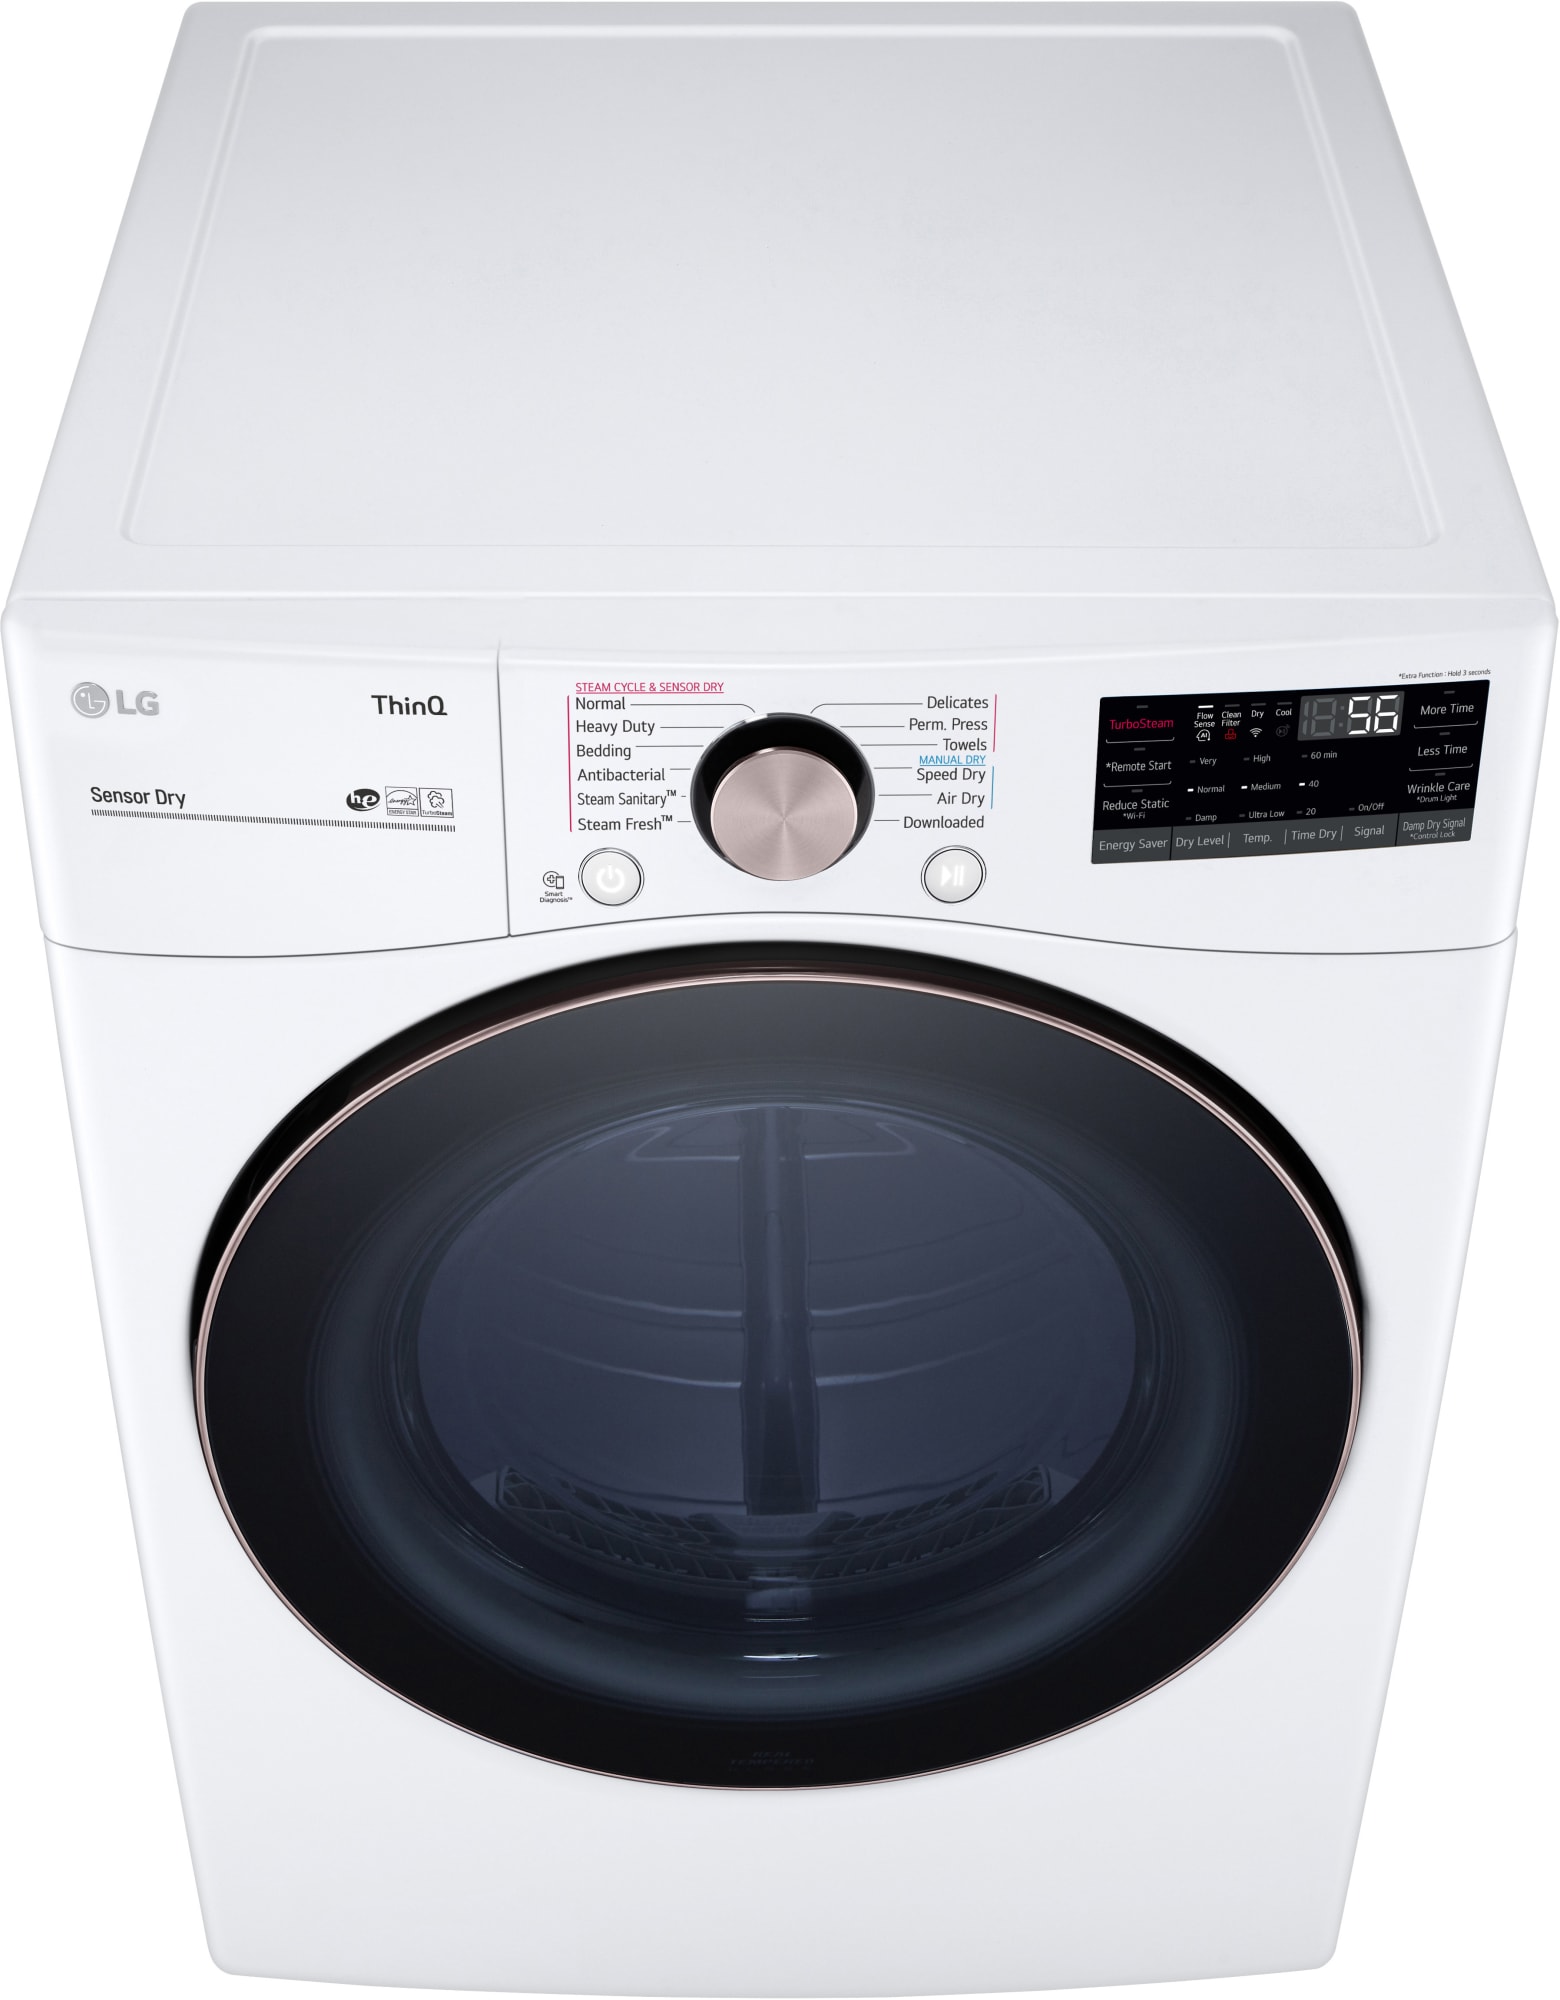 LG DLGX4001W 27 Inch Gas Smart Dryer with 7.4 Cu. Ft. Capacity, 12